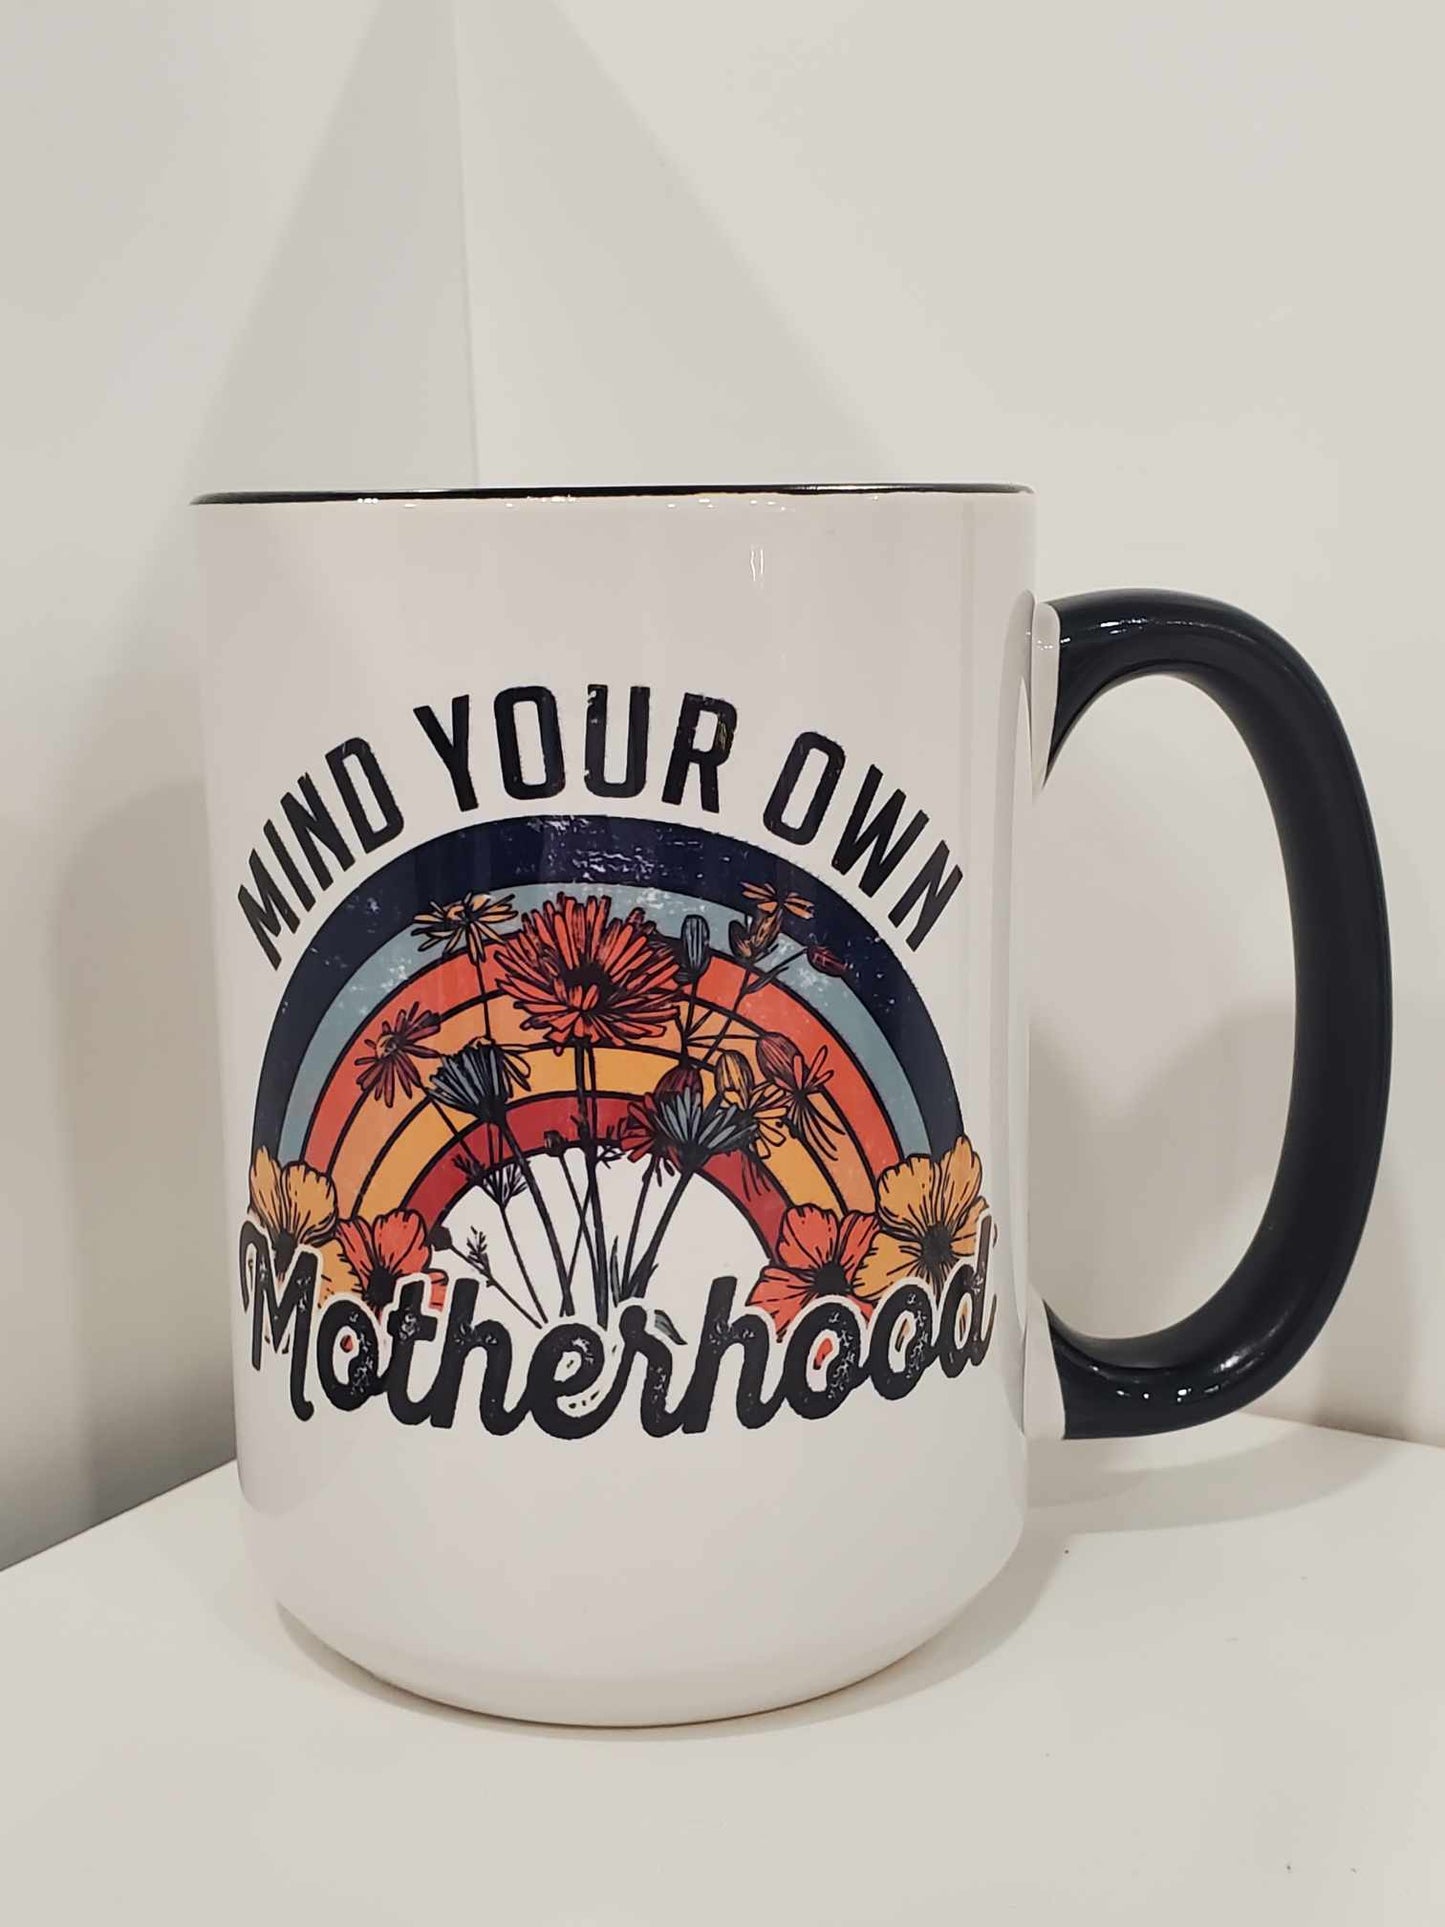 Mind Your Own Motherhood 15oz Coffee Mug Black